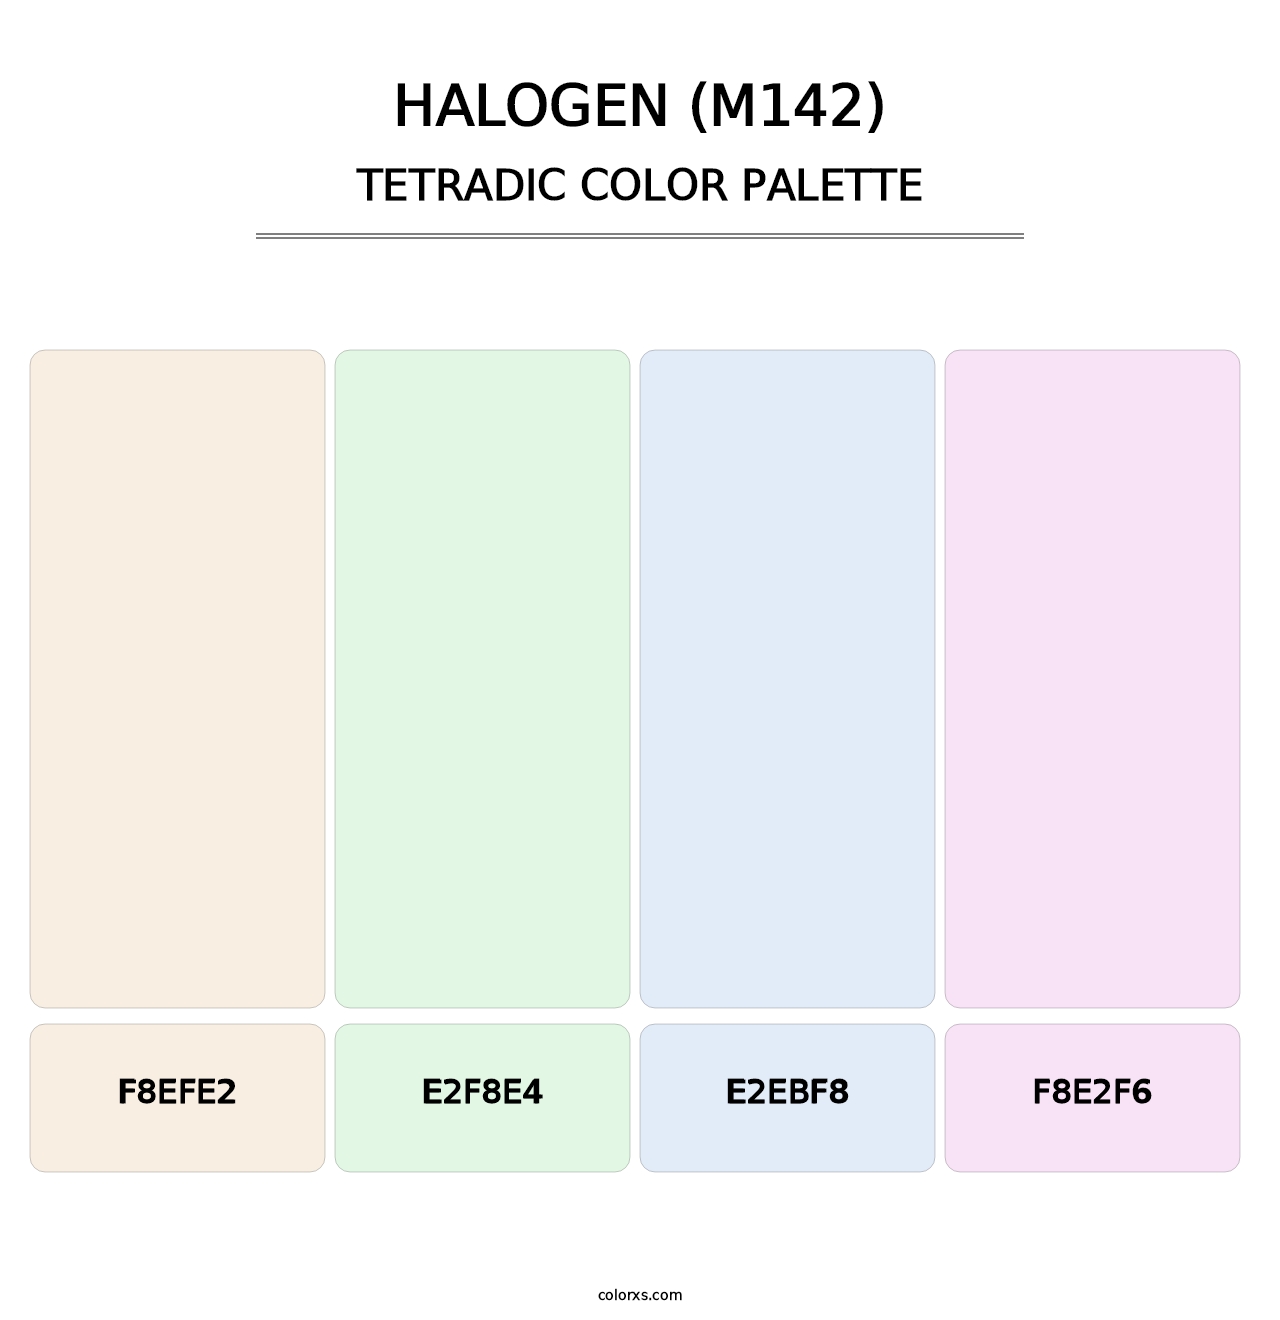 Halogen (M142) - Tetradic Color Palette